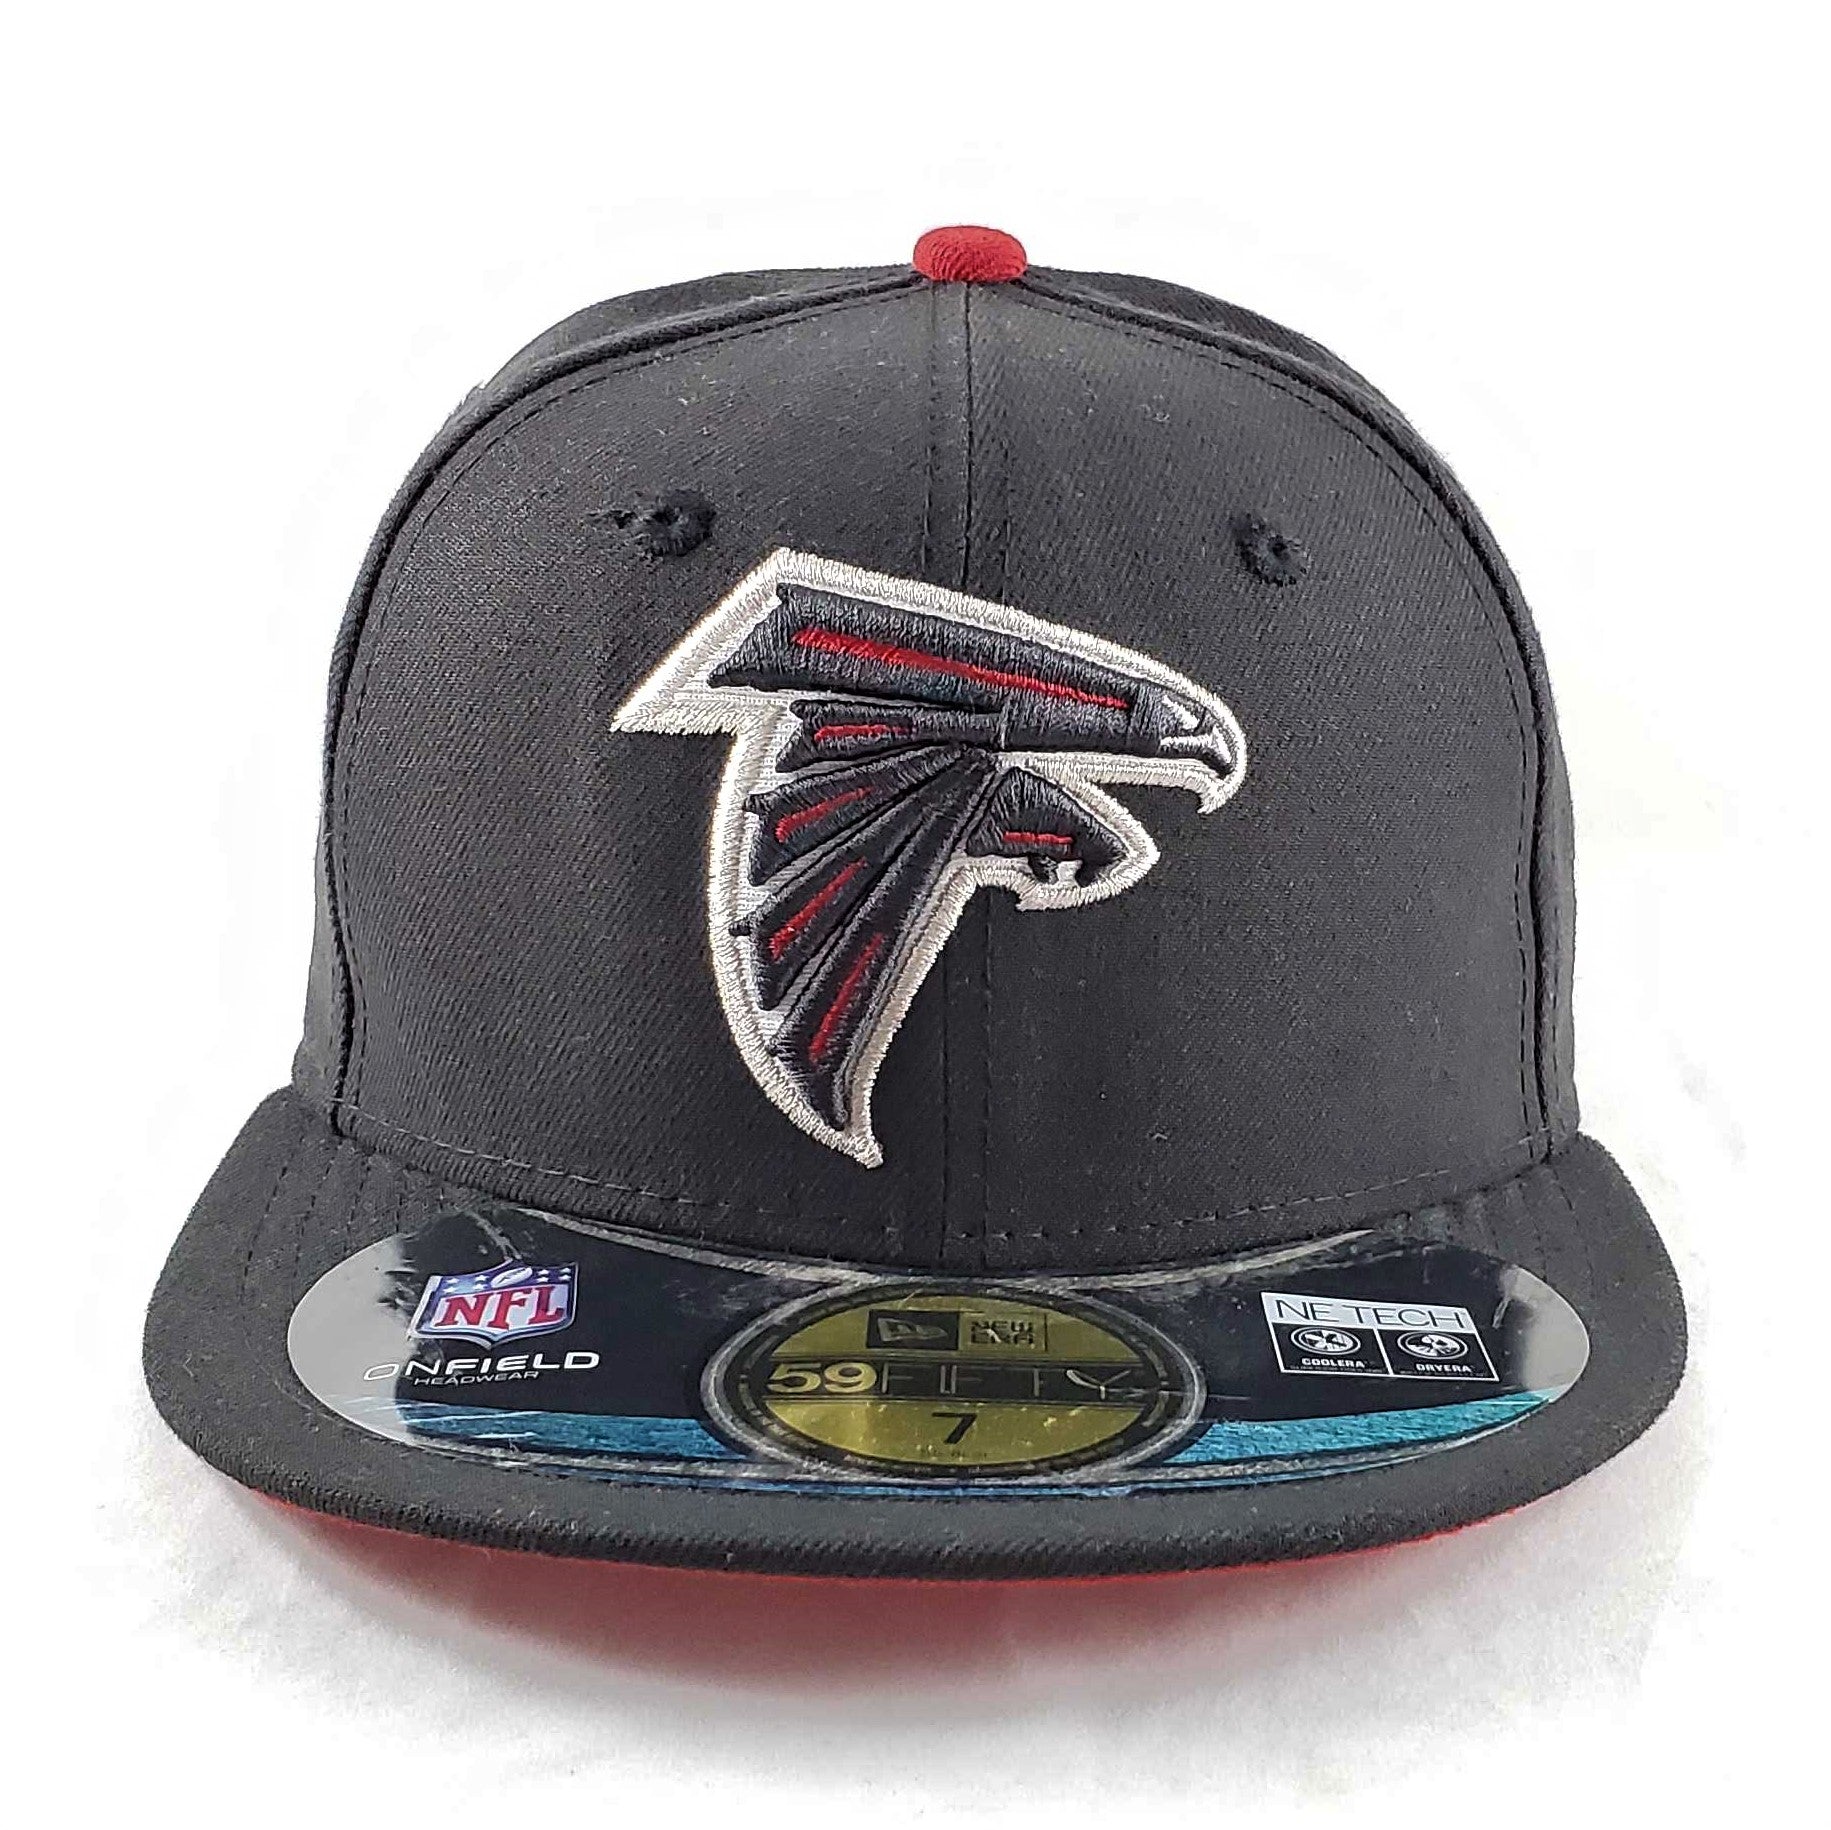 Veeg Voetganger referentie Atlanta Falcons NFL On Field Fitted Cap - Craze Fashion